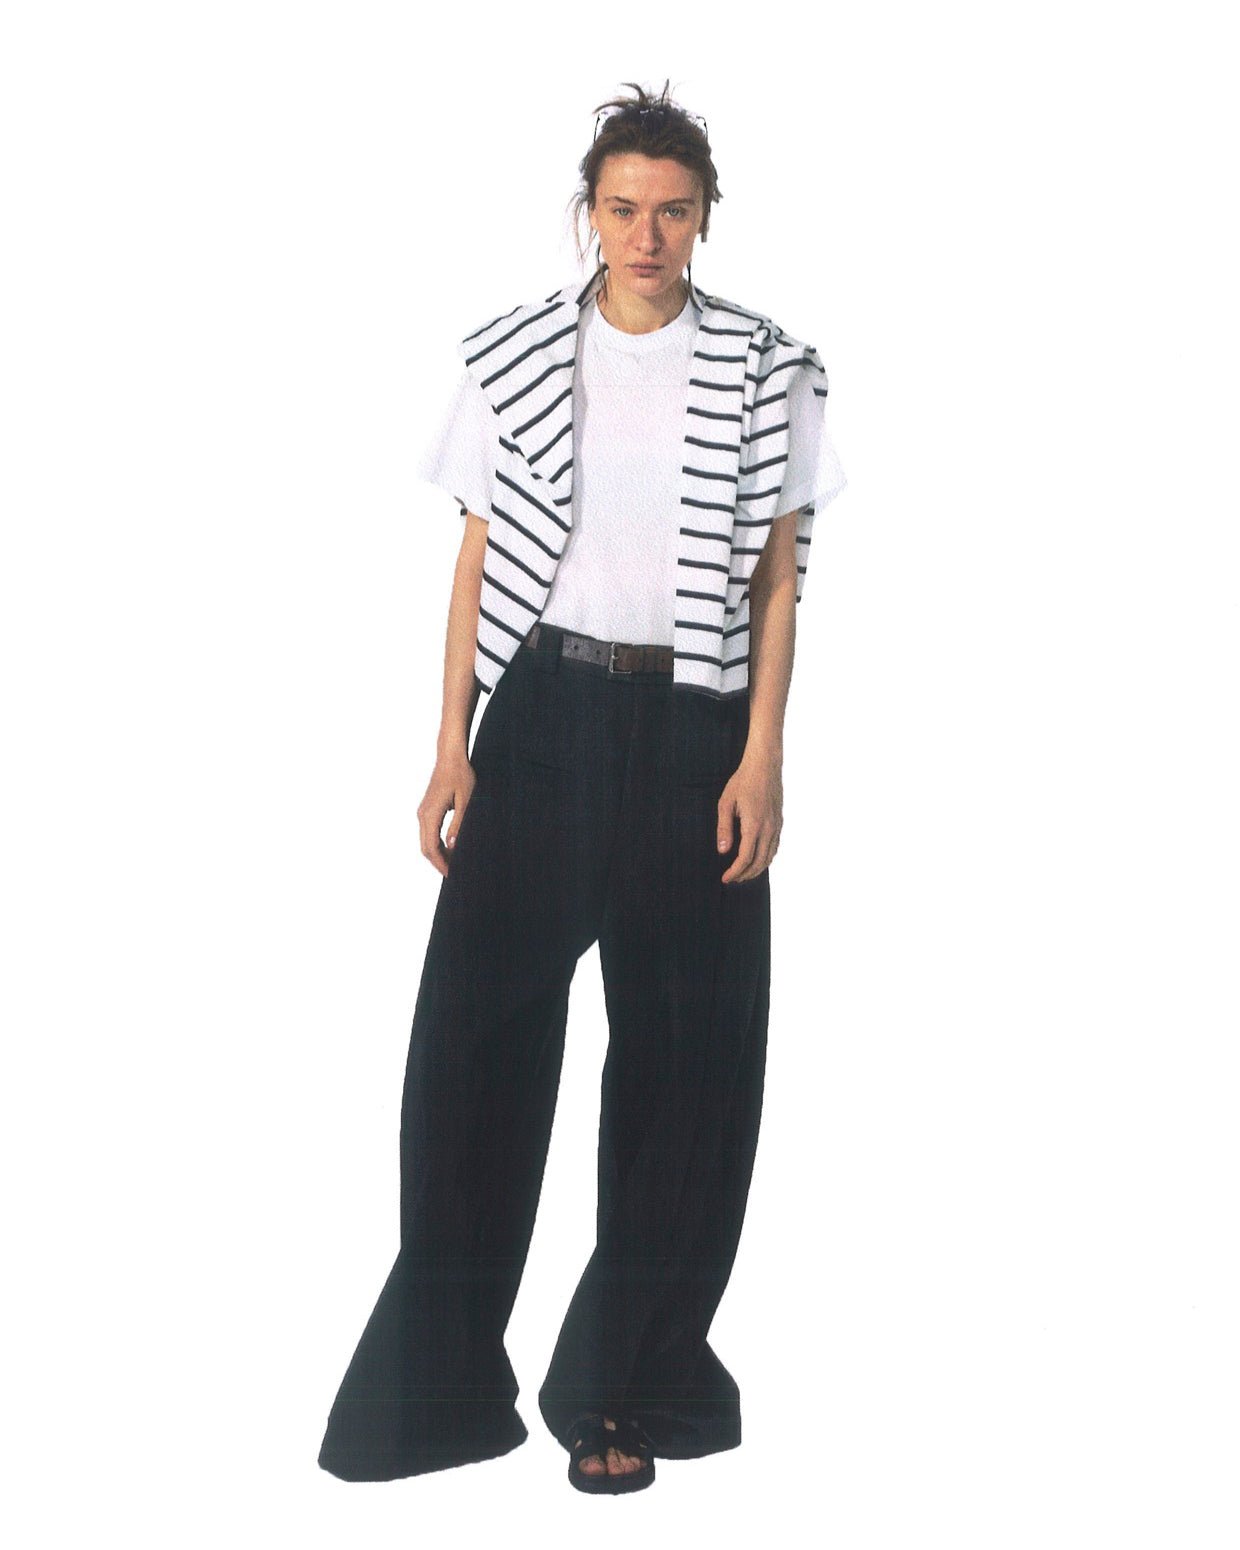 FaxCopyExpress Oversized Harem Suit パンツL-